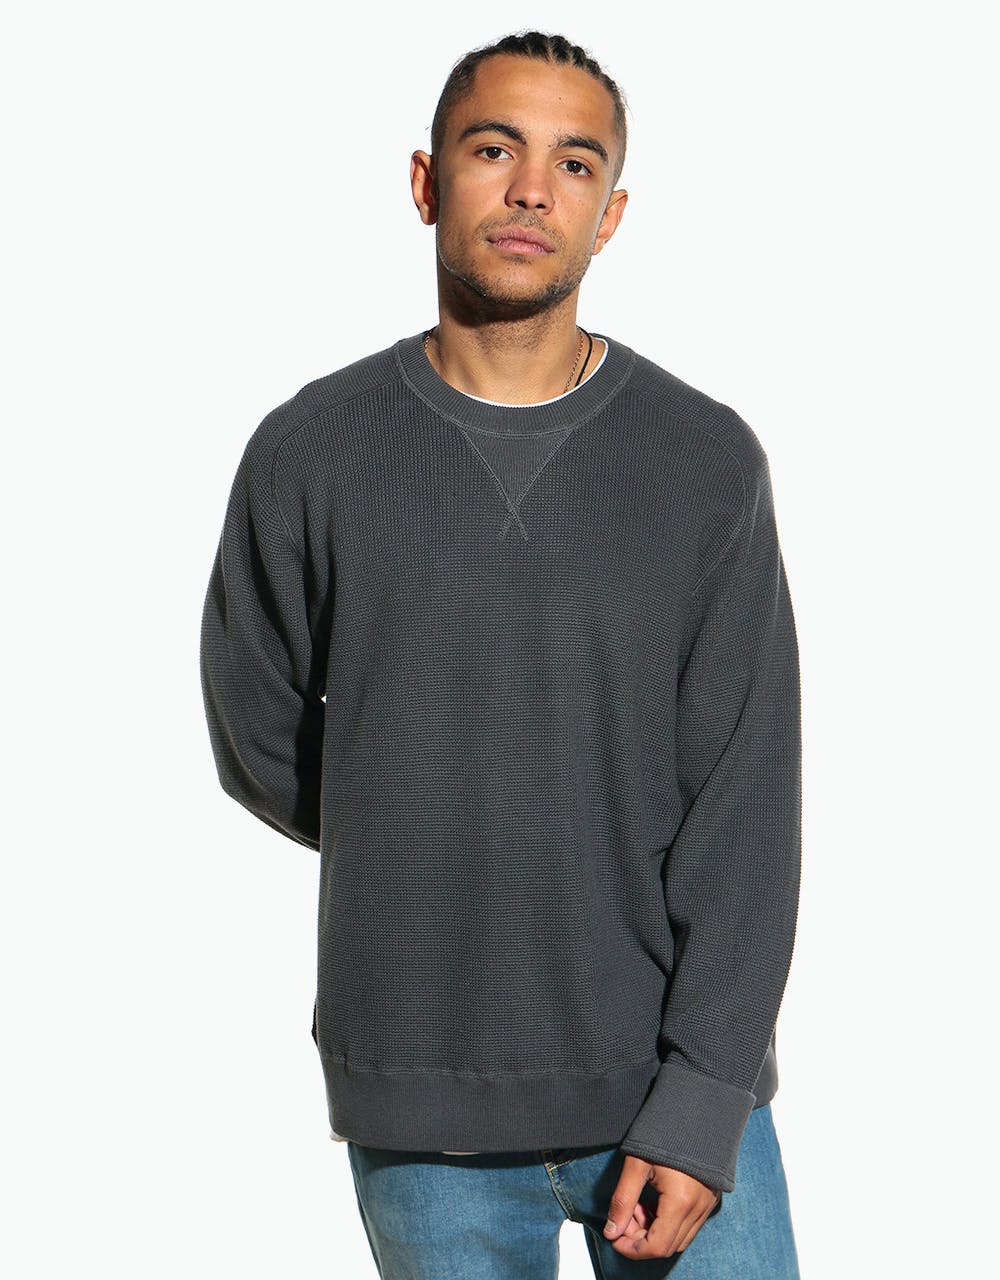 Carhartt WIP Moross Sweater - Blacksmith